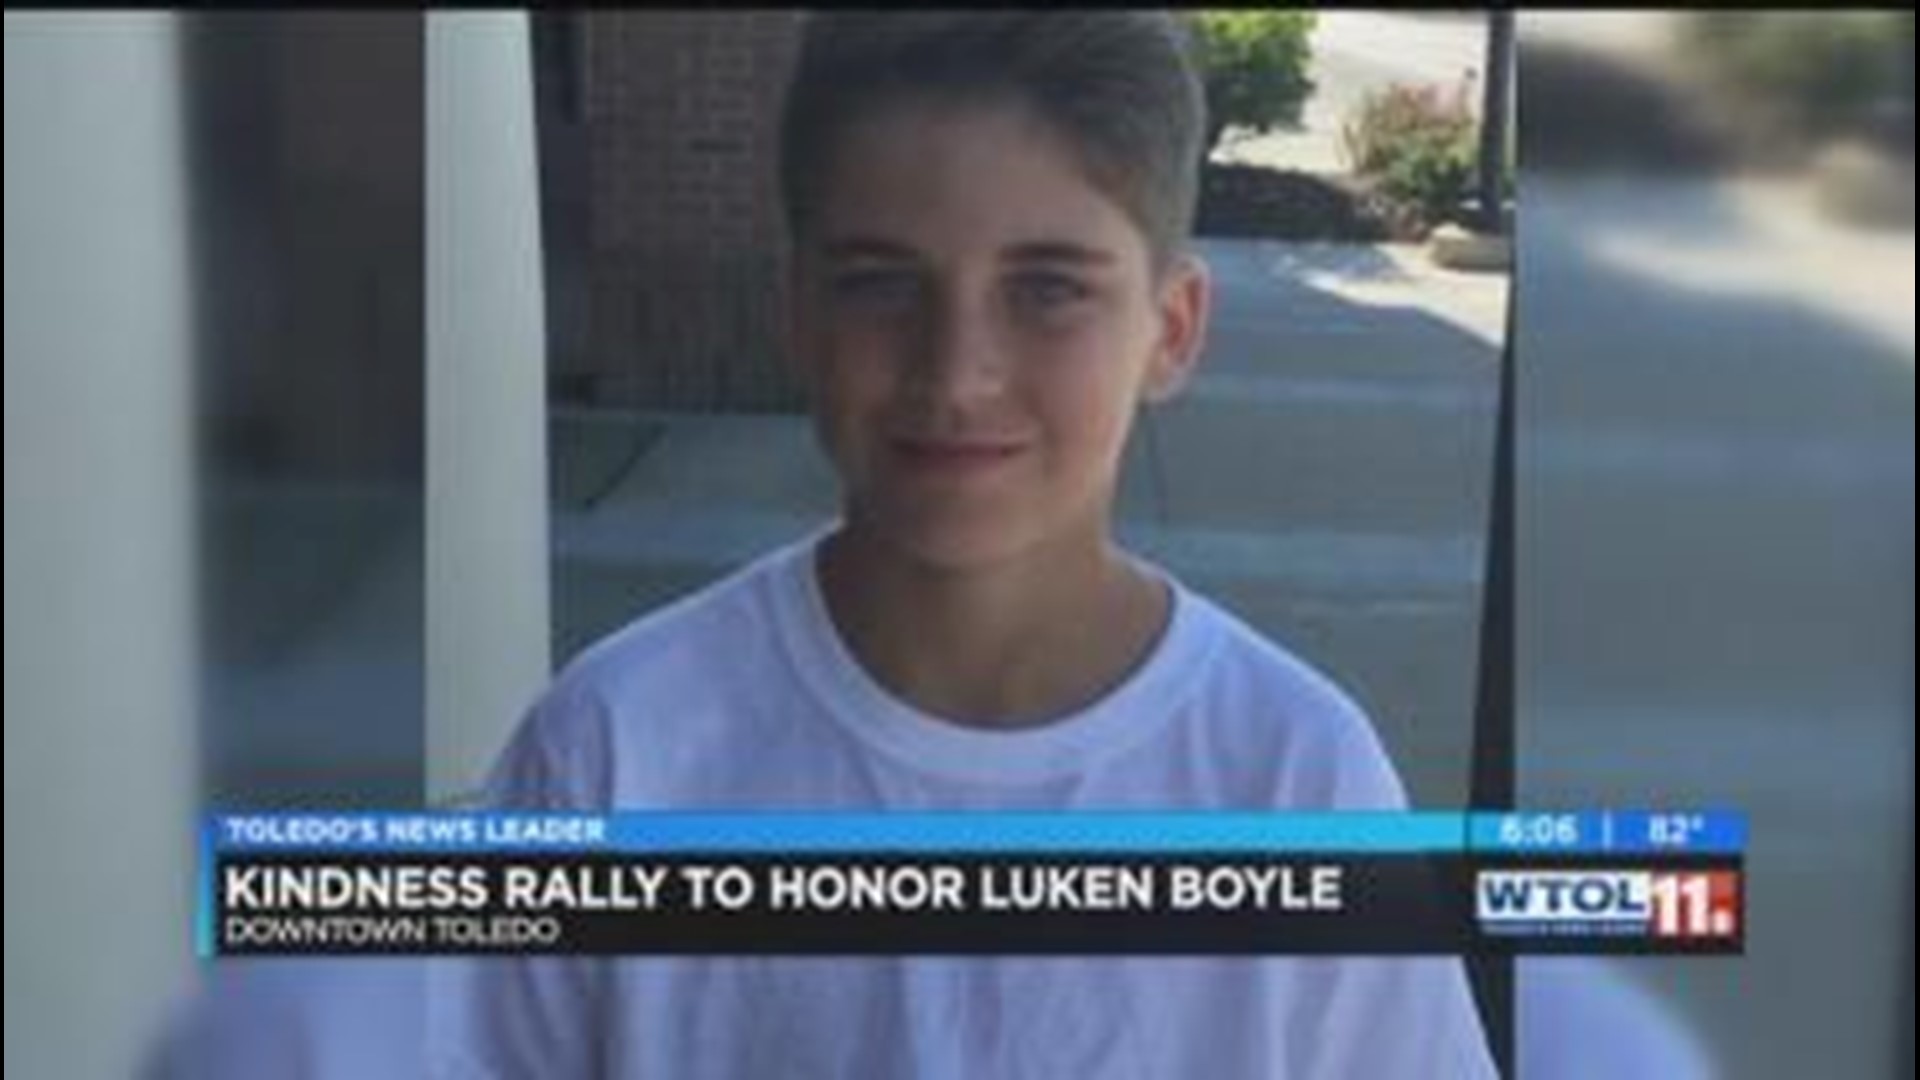 Hensville Park to host kindness rally in Luken Boyle's honor July 31st